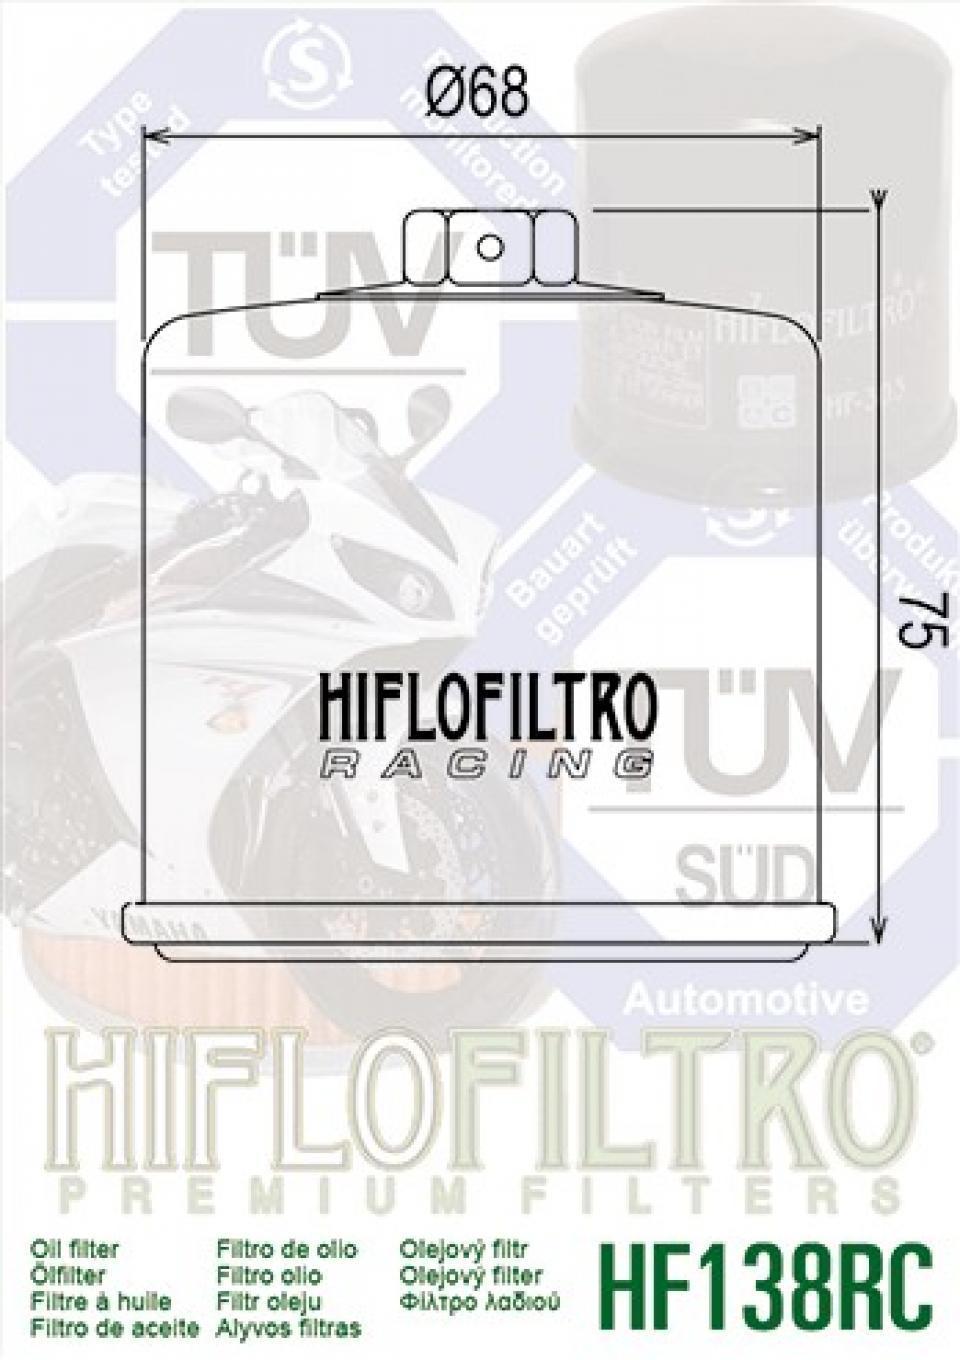 Filtre à huile Hiflofiltro pour Moto Suzuki 1200 GSX Inazuma 1999 à 2001 HF138RC Neuf